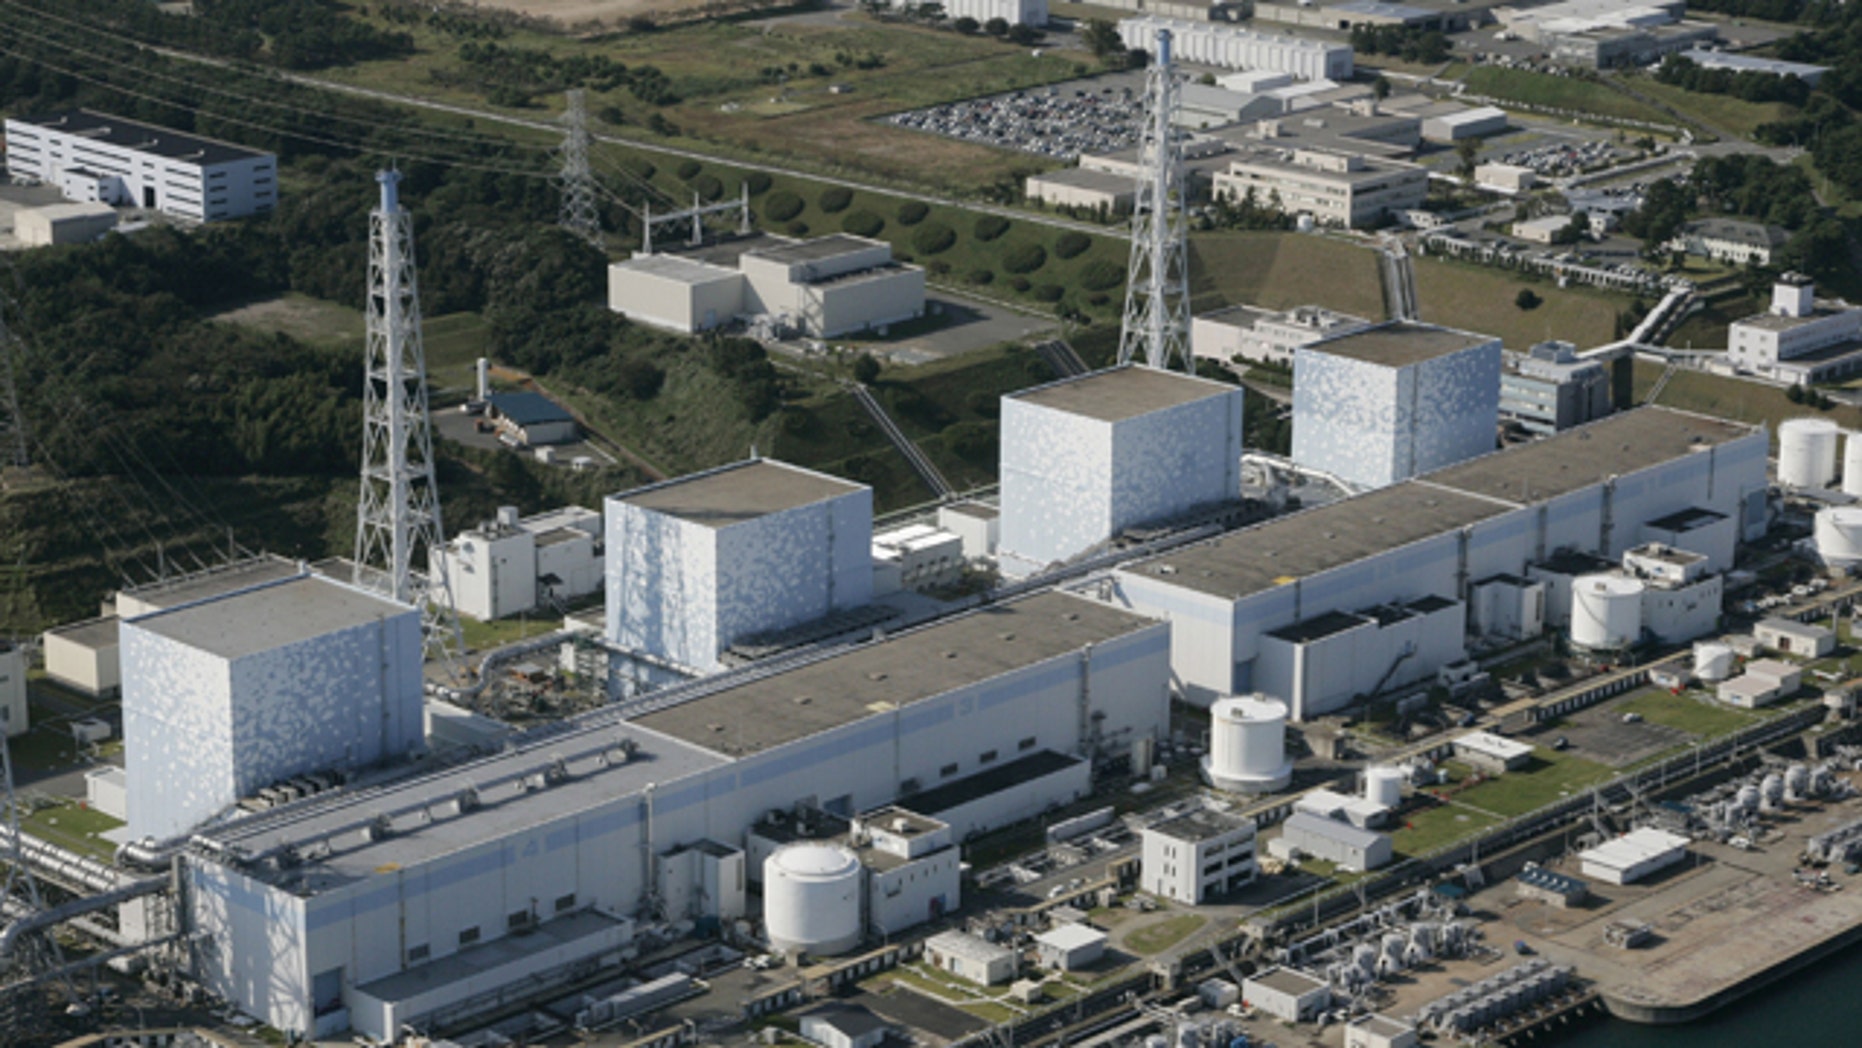 The Fukushima Nuclear Power Plant